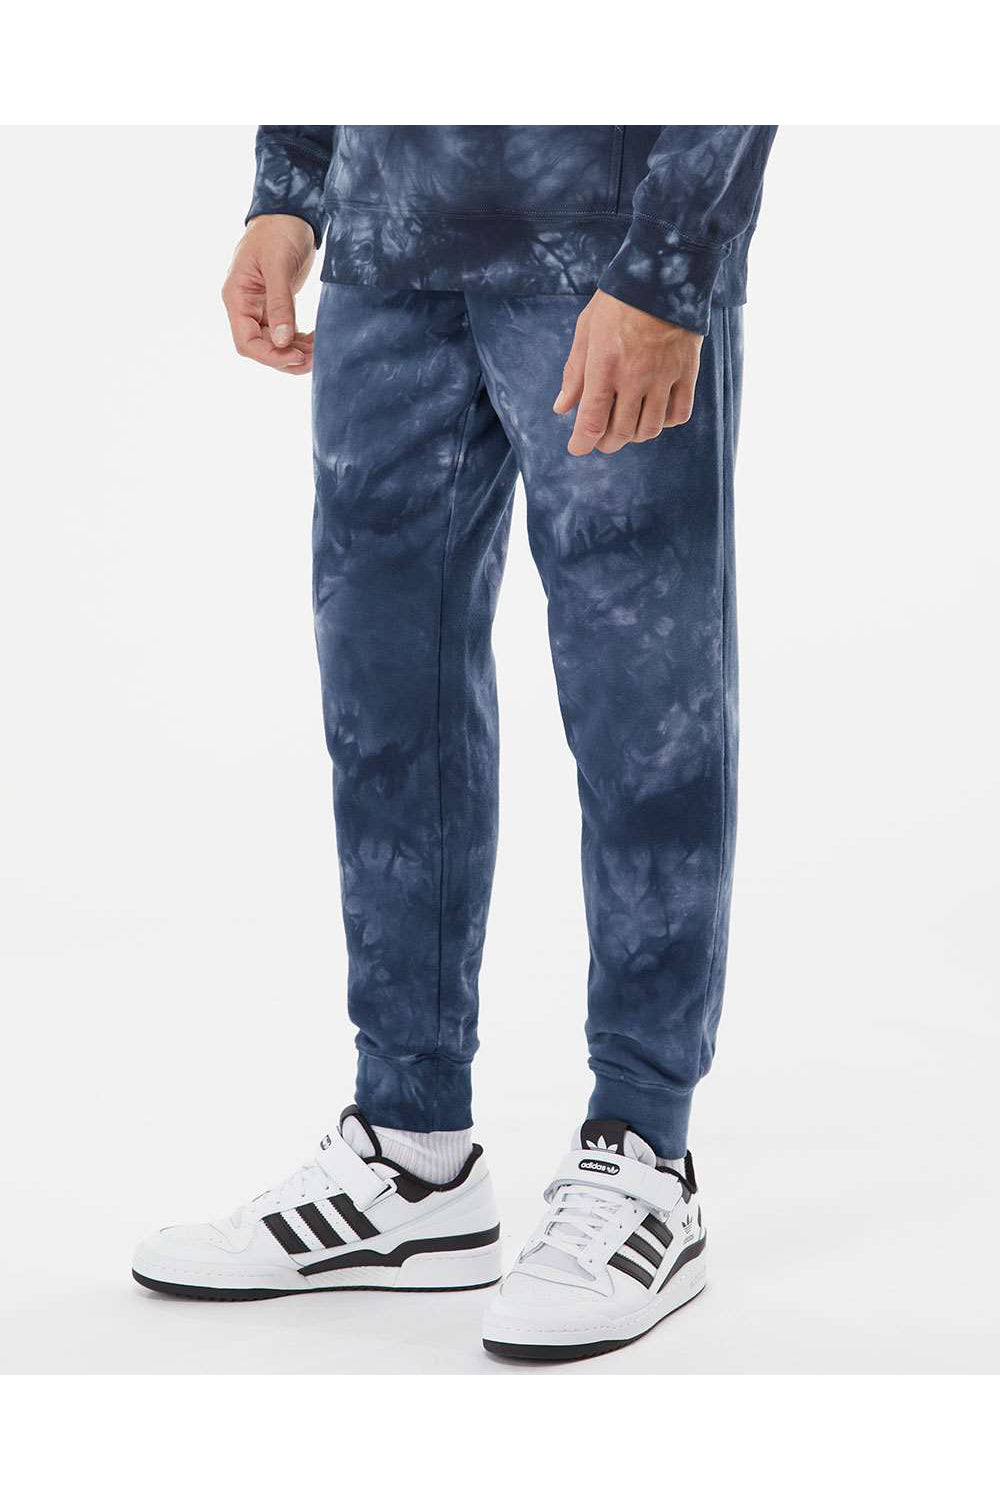 Independent Trading Co. PRM50PTTD Mens Tie-Dye Fleece Sweatpants w/ Pockets Navy Blue Model Side